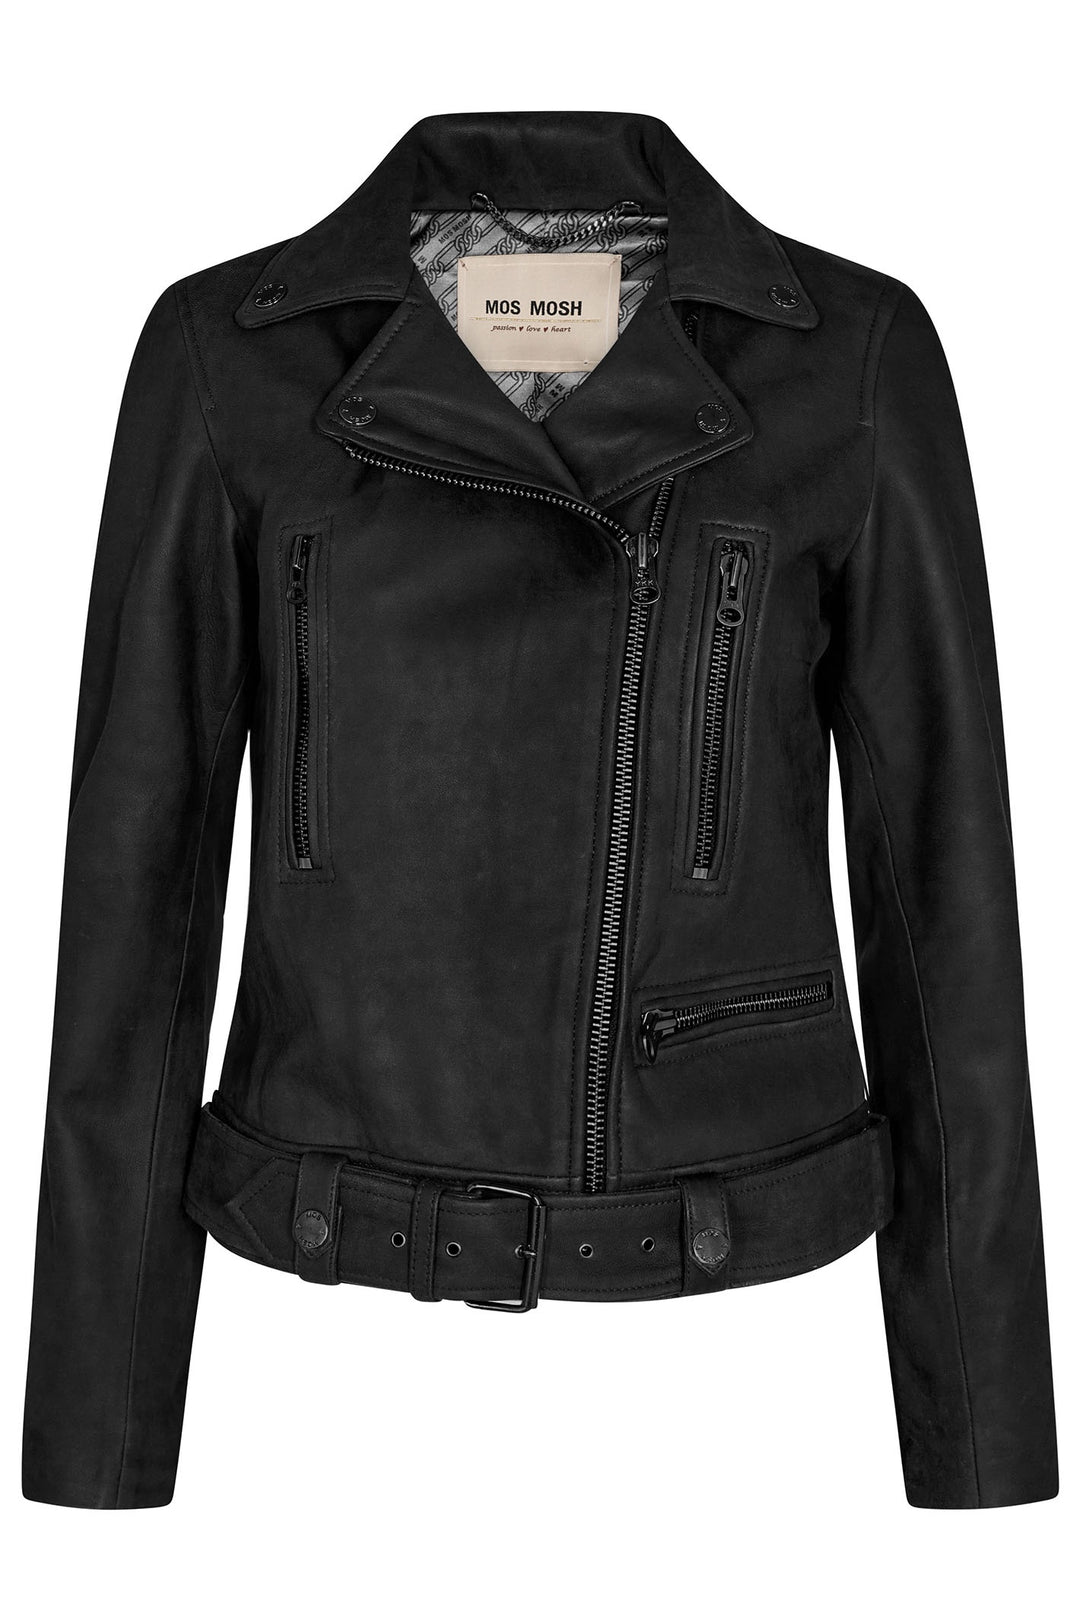 Mos Mosh 156840 MMAlmina Black Biker Style Leather Jacket - Dotique